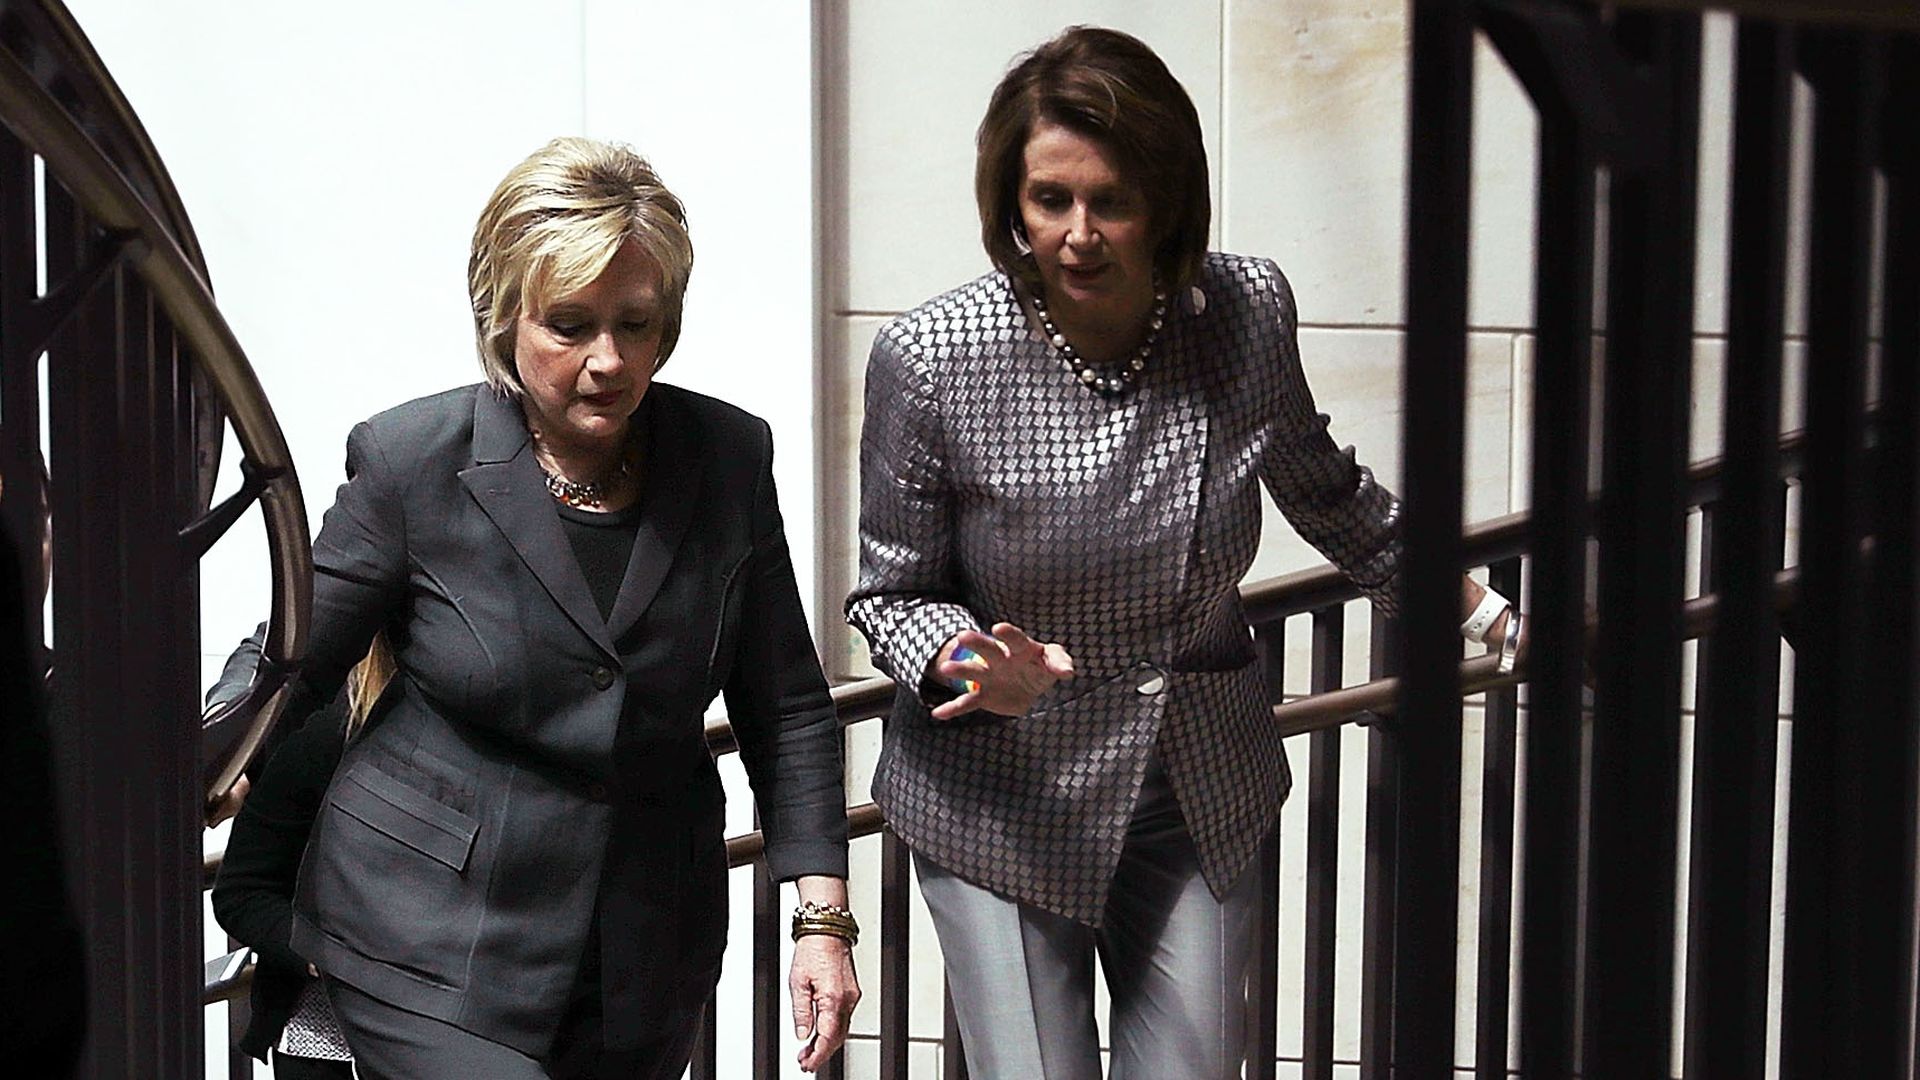 Hillary Clinton and Nancy Pelosi talk together walking.